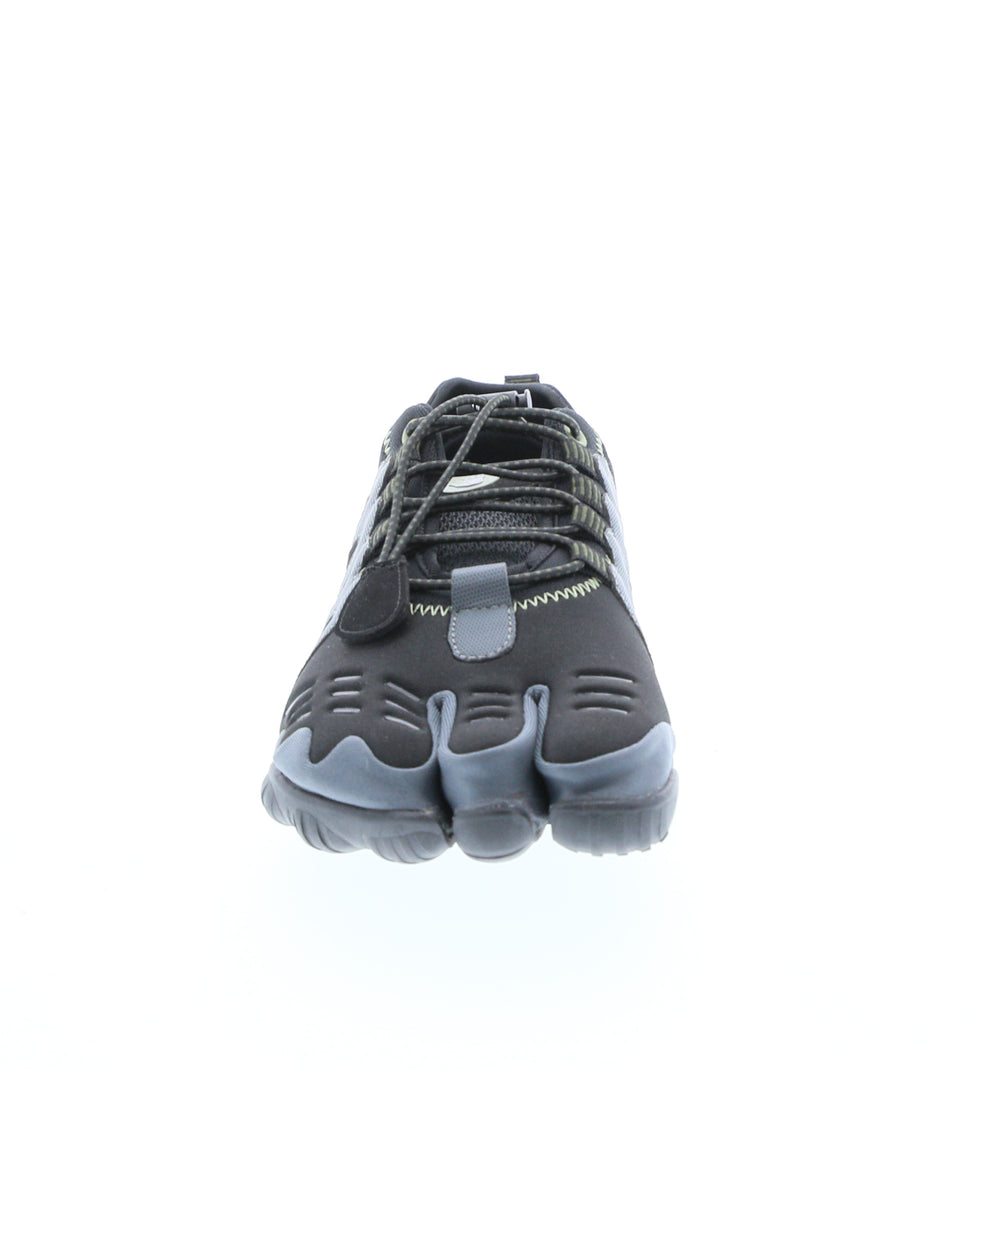 Men's 3T Barefoot Warrior Water Shoes - Black/Aloe